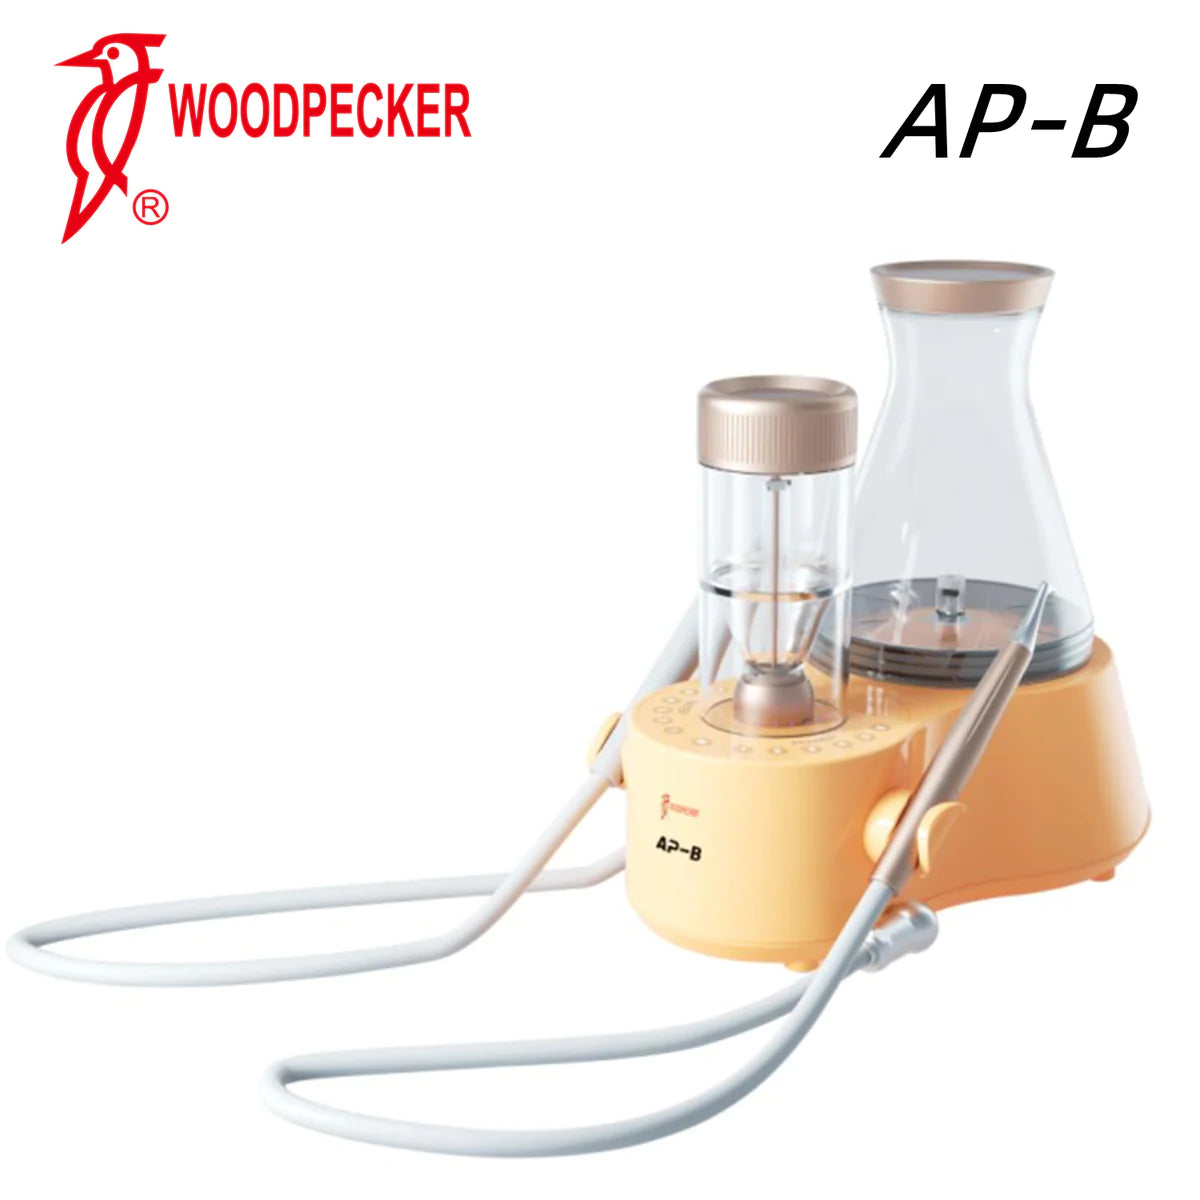 Vakker 27-103, Woodpecker AP-B Dental Scaler and Air Polisher